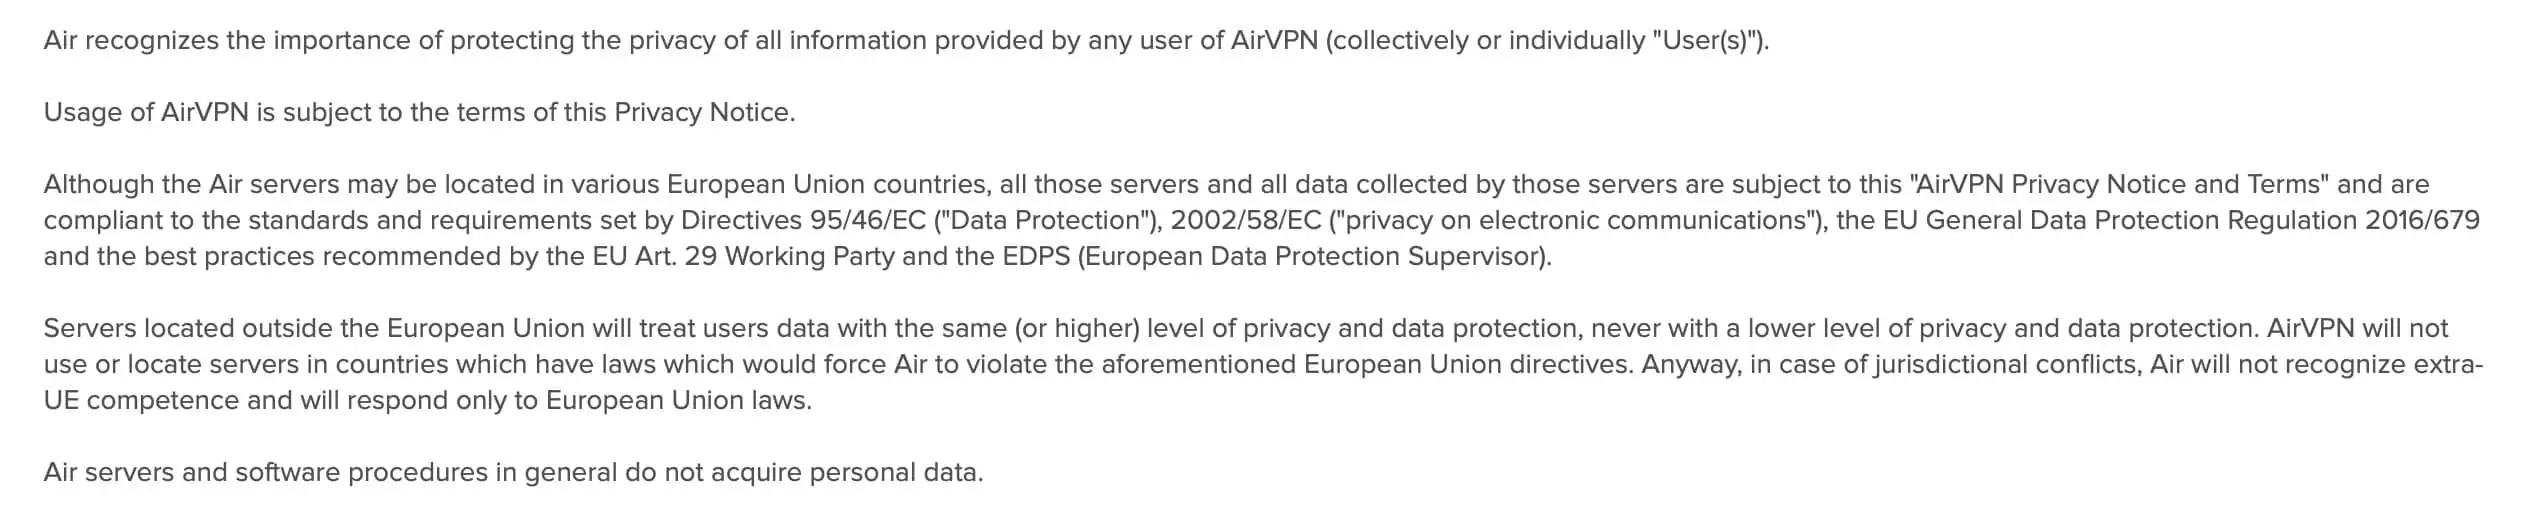 AirVPN - Privacy Policy 1